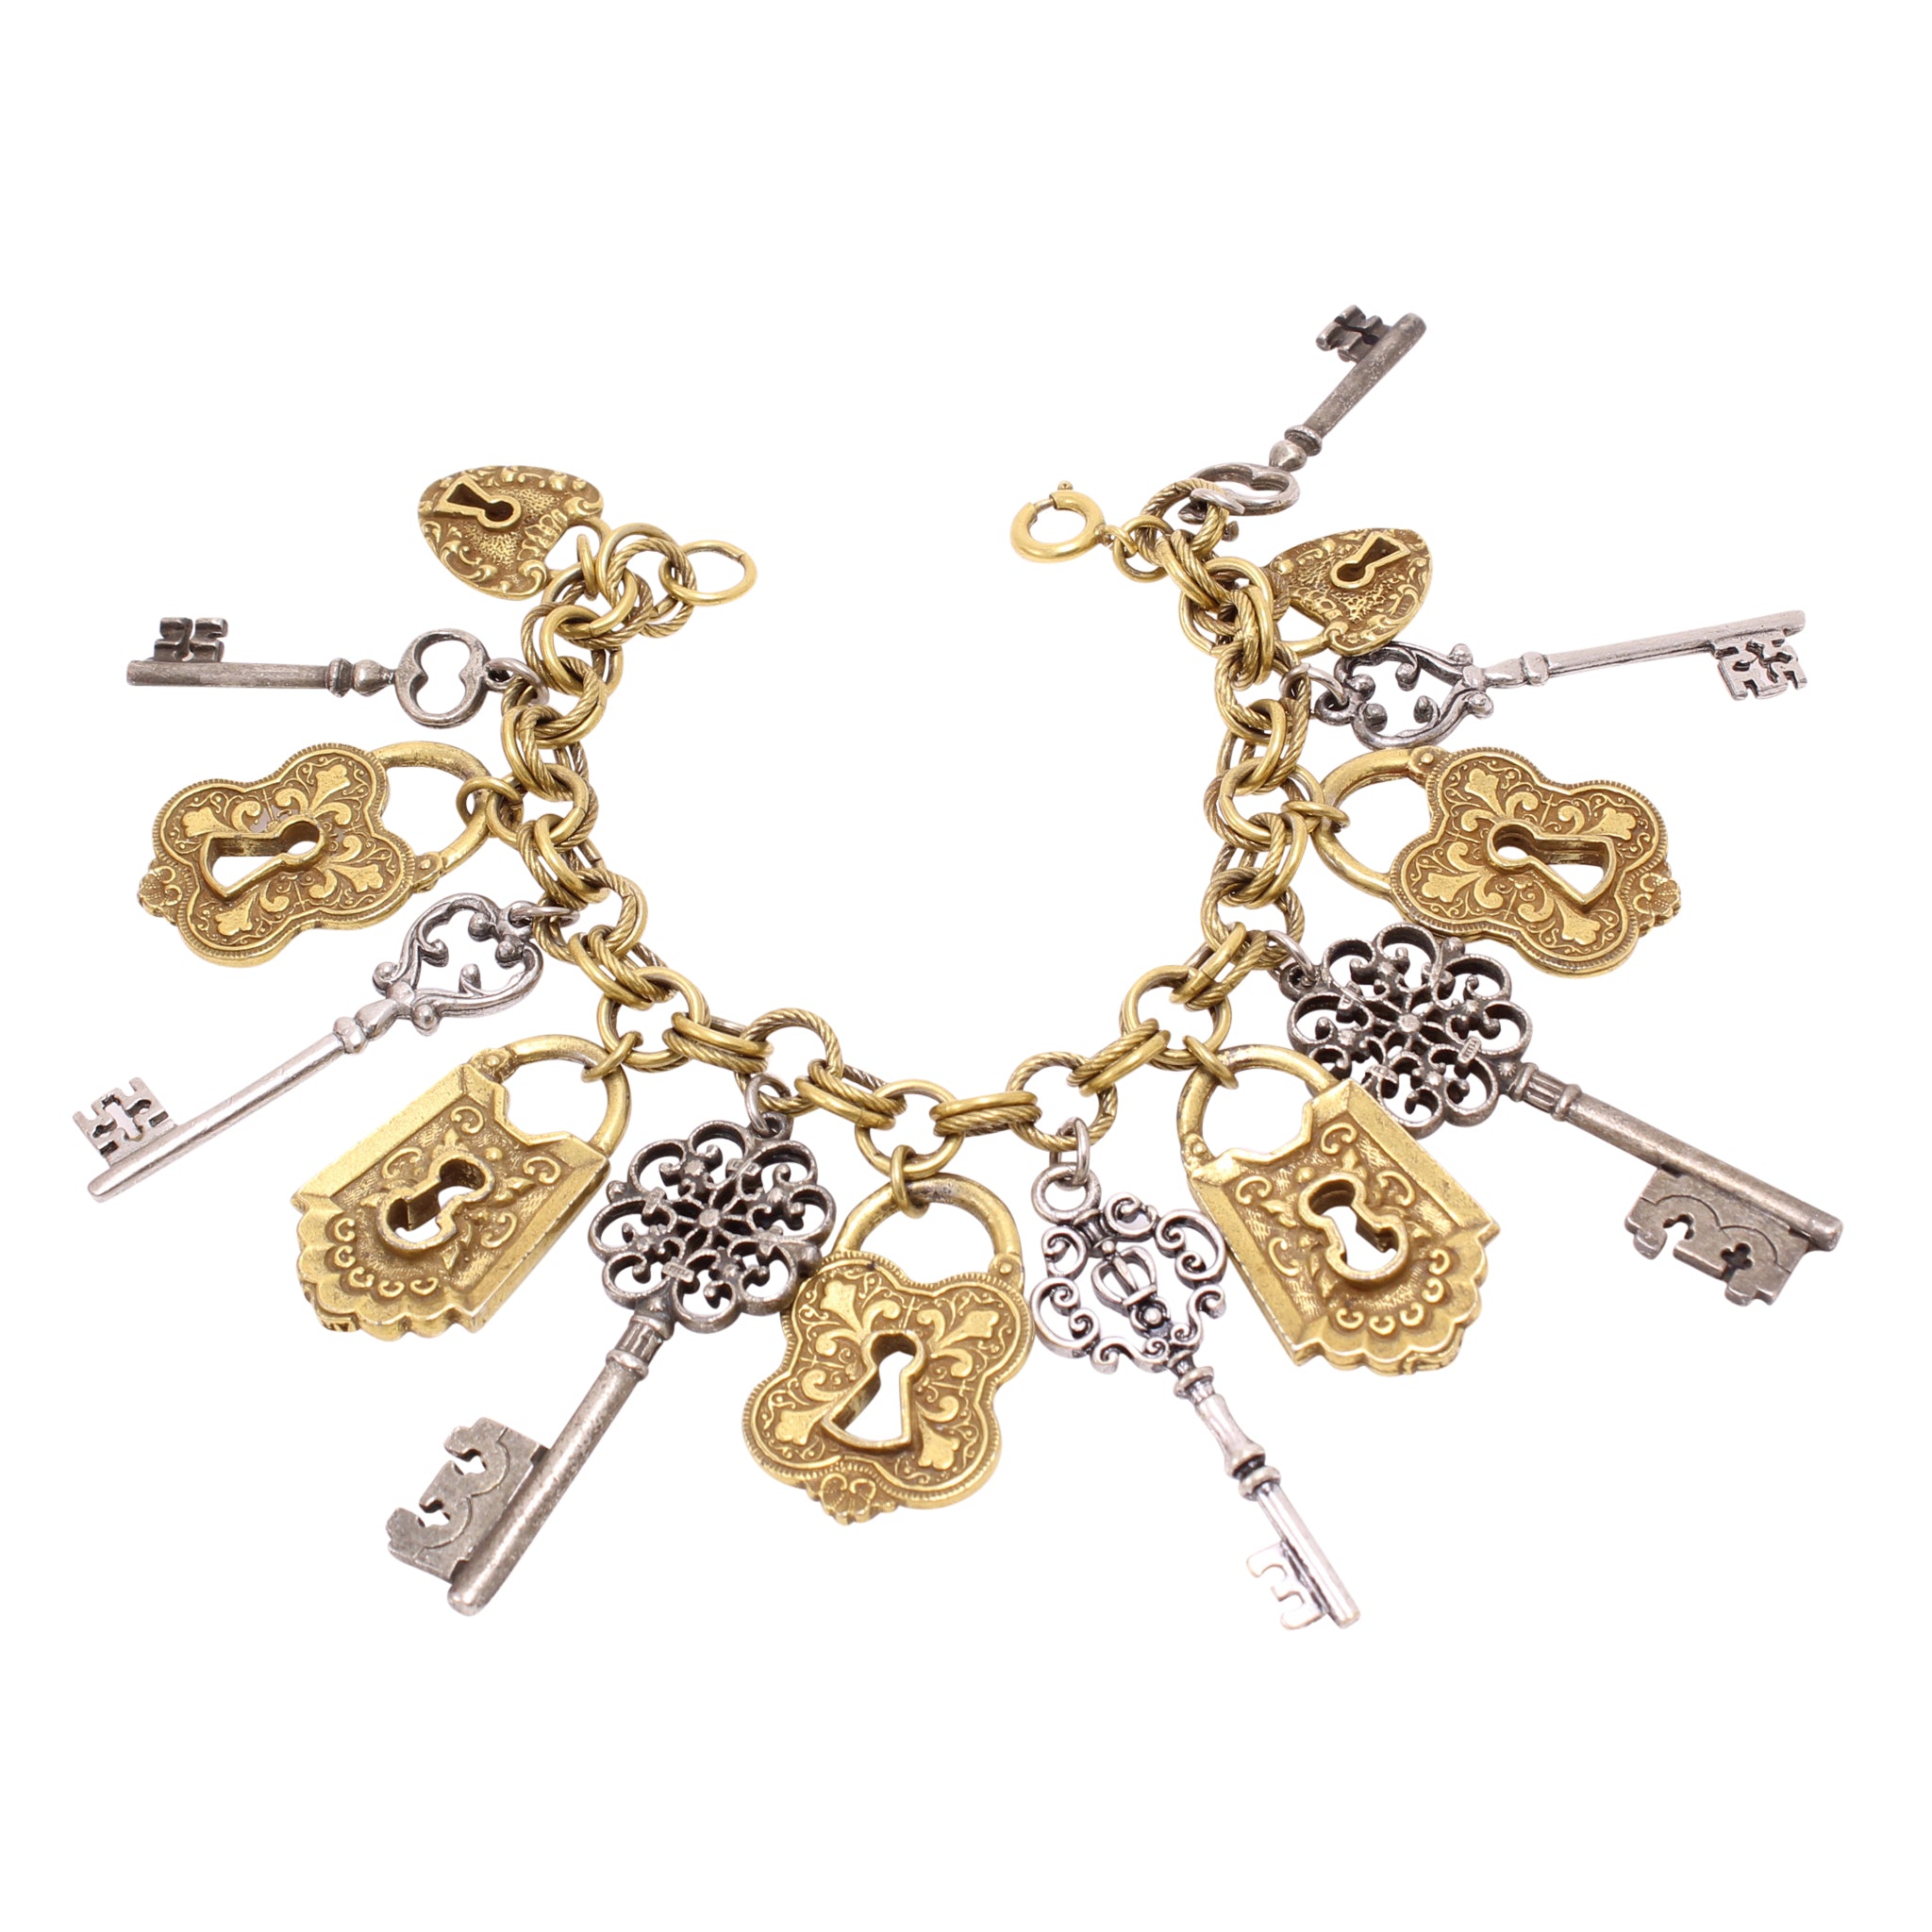 Skeleton Key and Lock Charm Bracelet Front